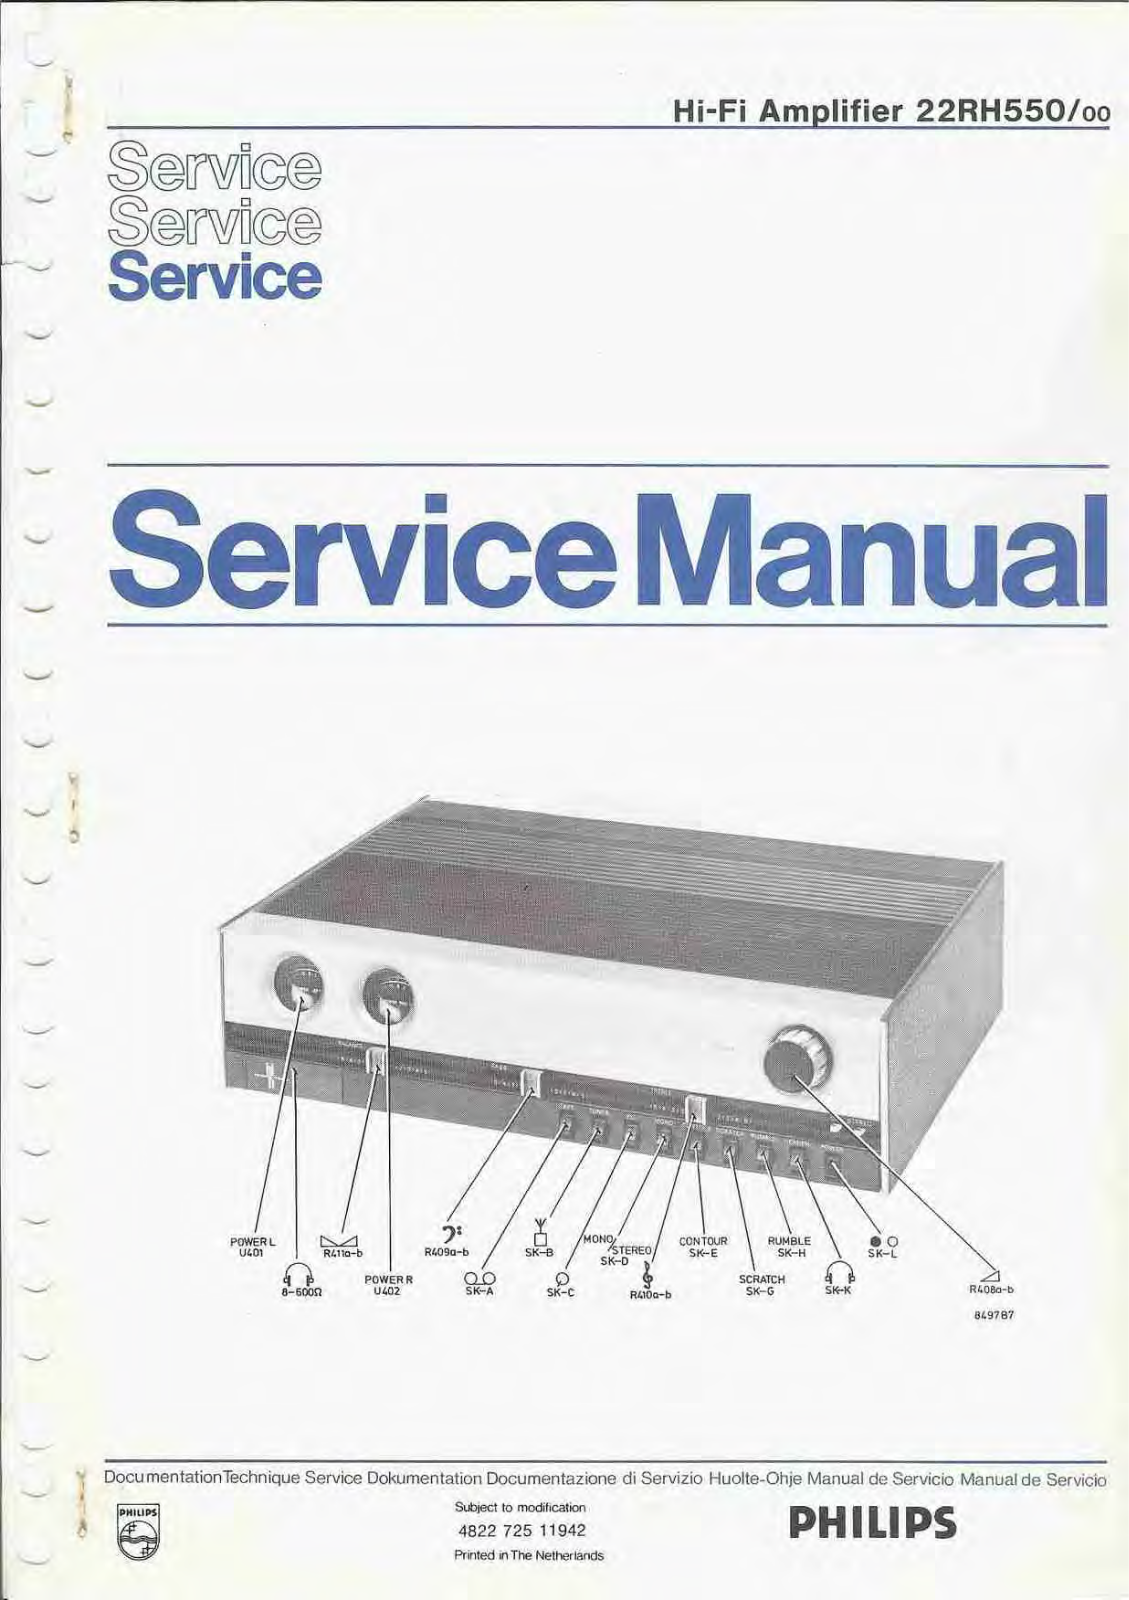 Philips 22-RH-550 Service Manual